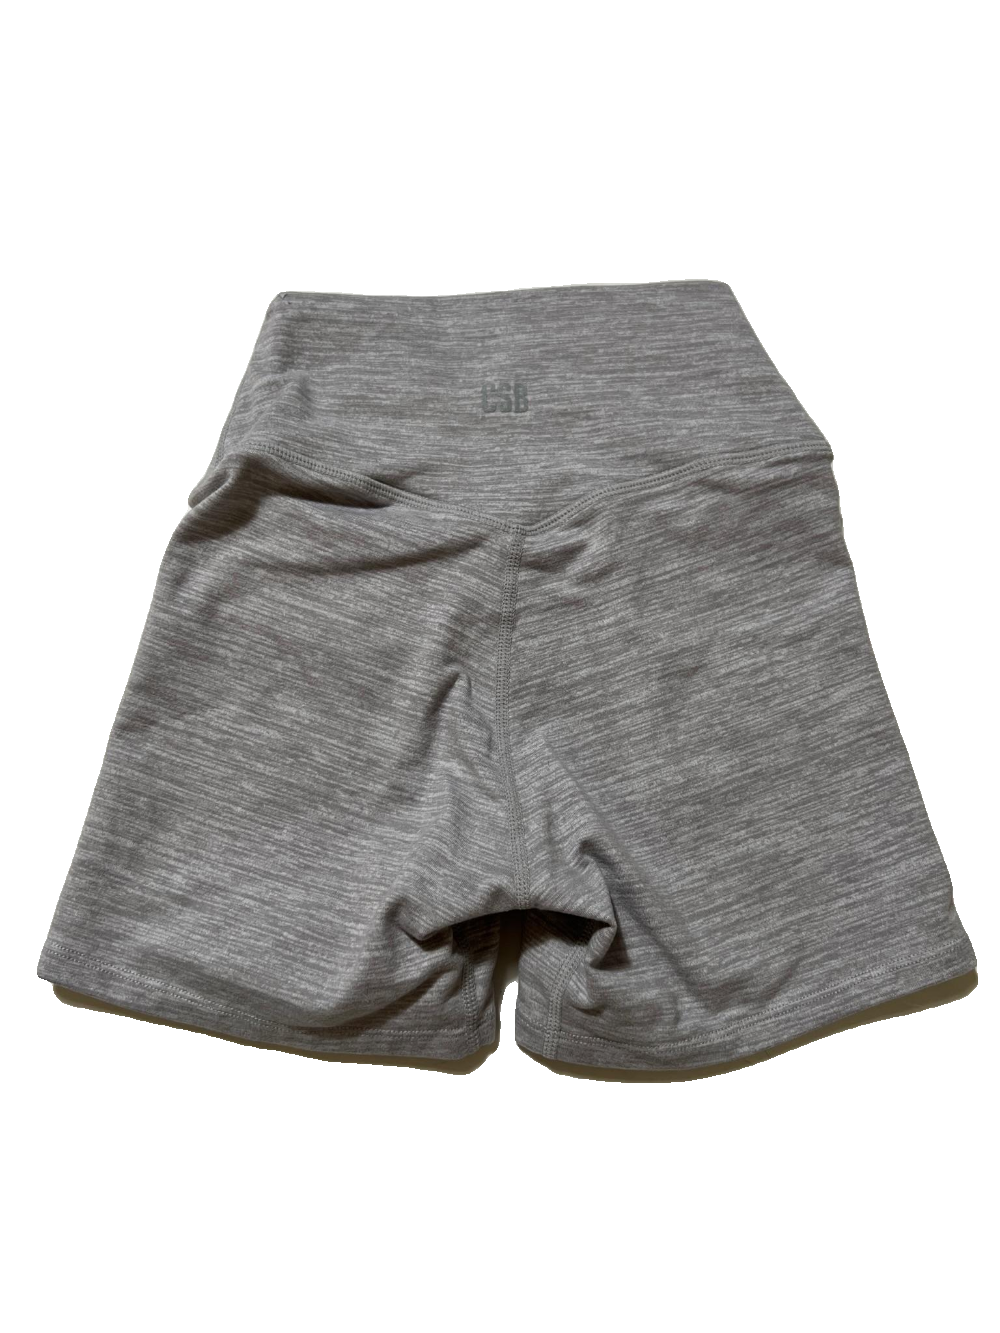 CSB- Gray Biker Shorts